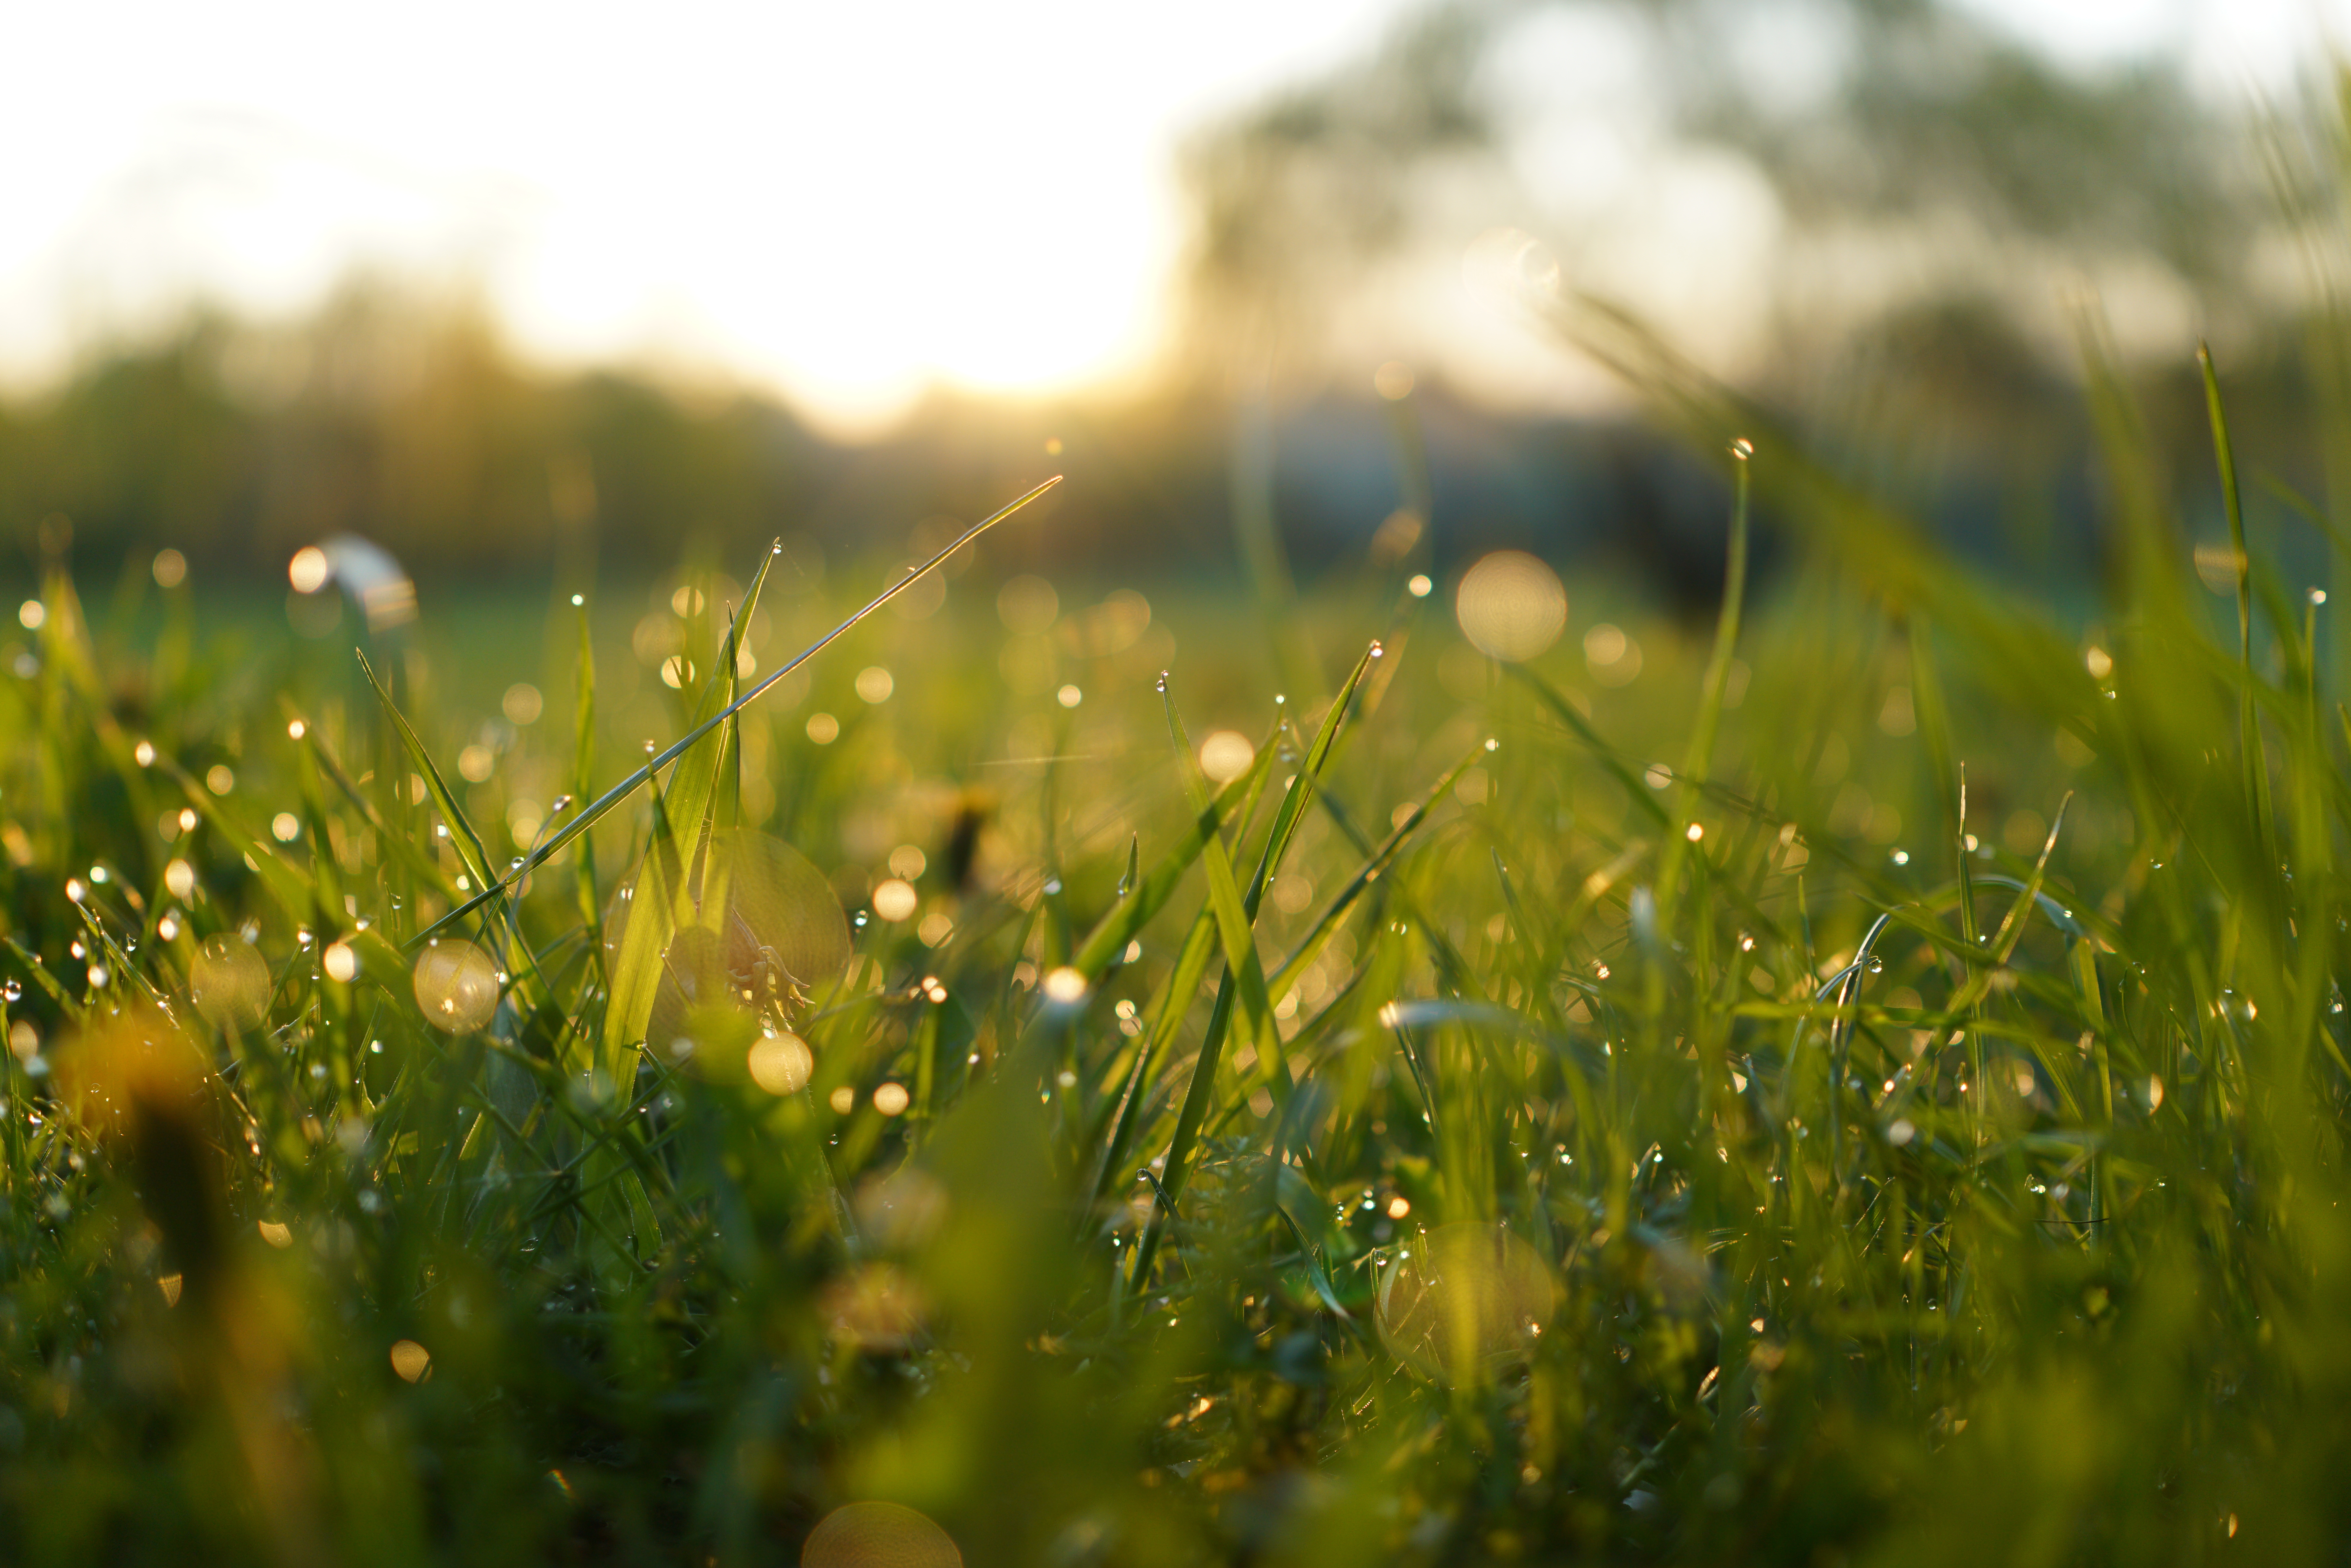 Там над травою. Луг в росе. Солнечная трава. Утренняя роса на траве. Утренняя роса.